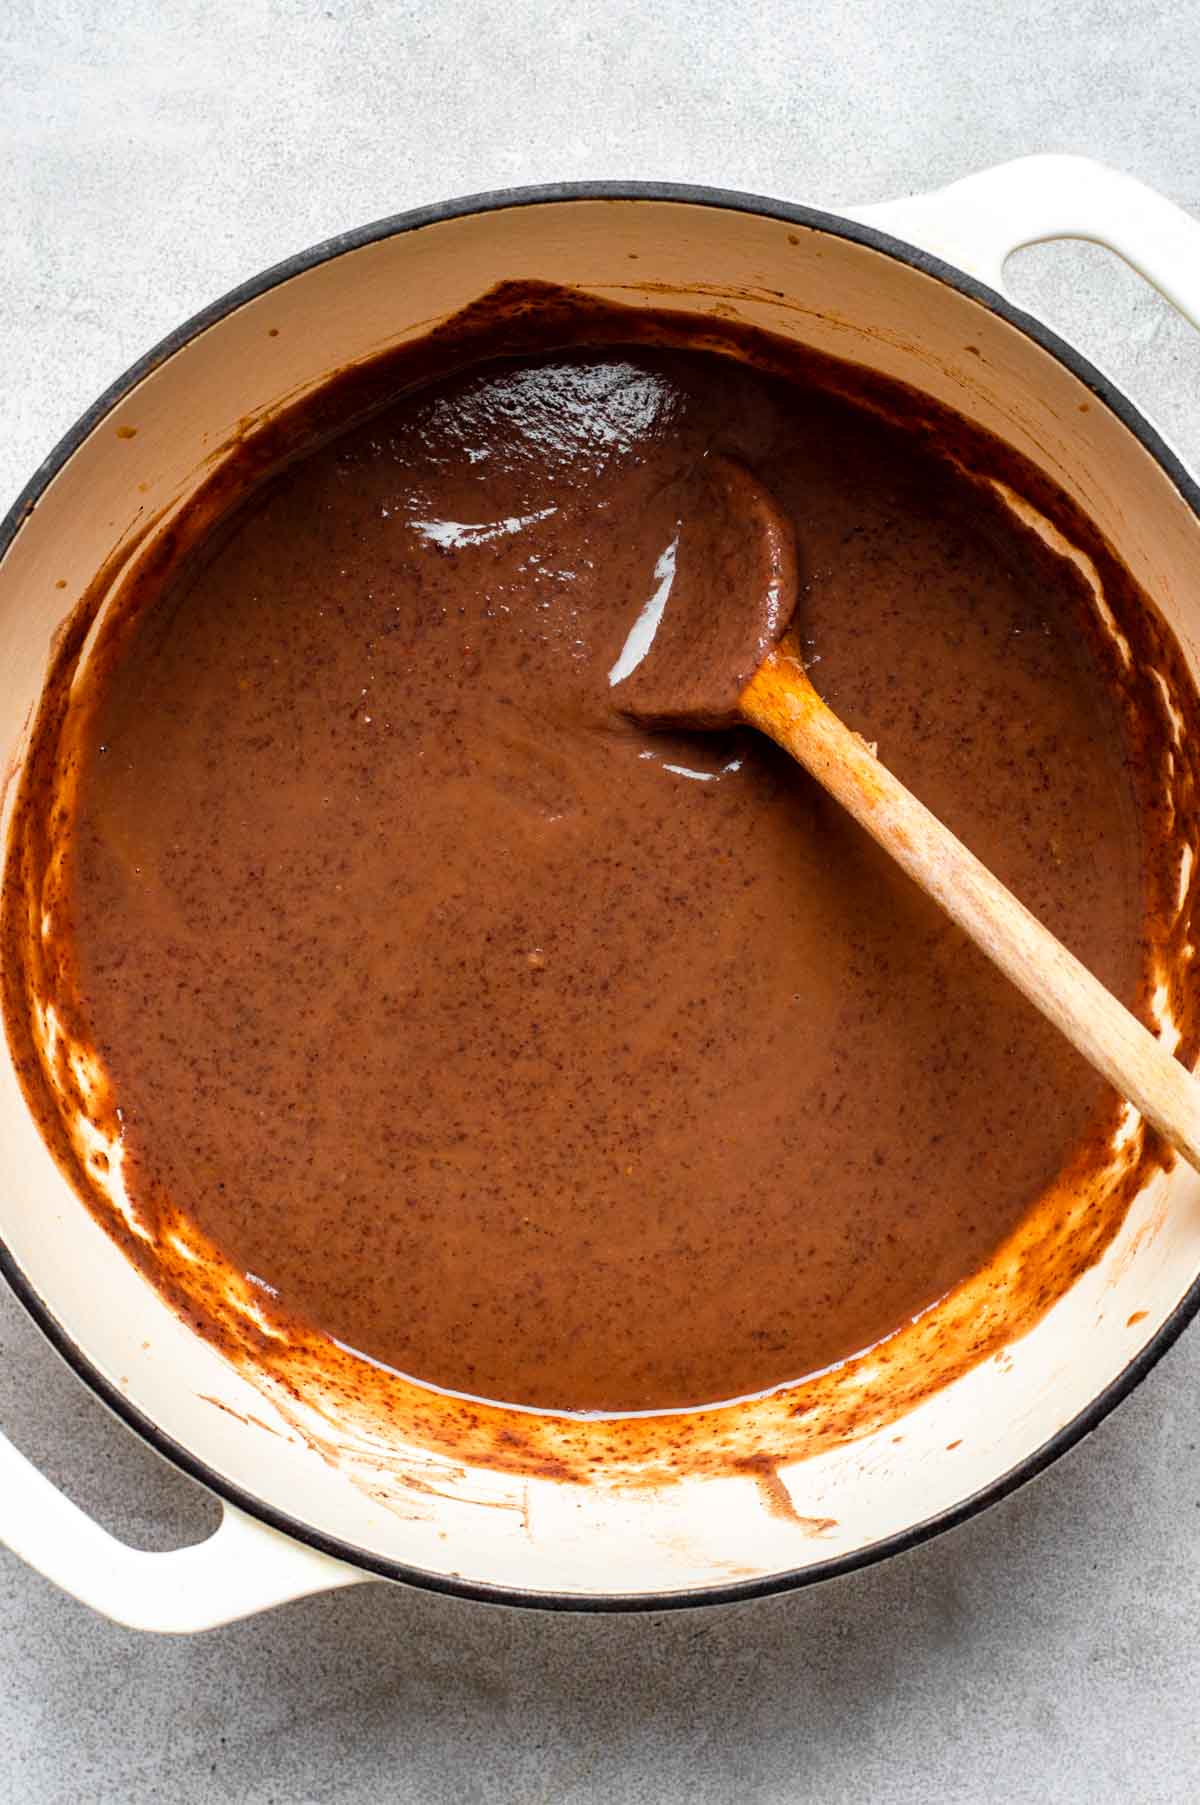 Black bean sauce mixture heating in a large pan.